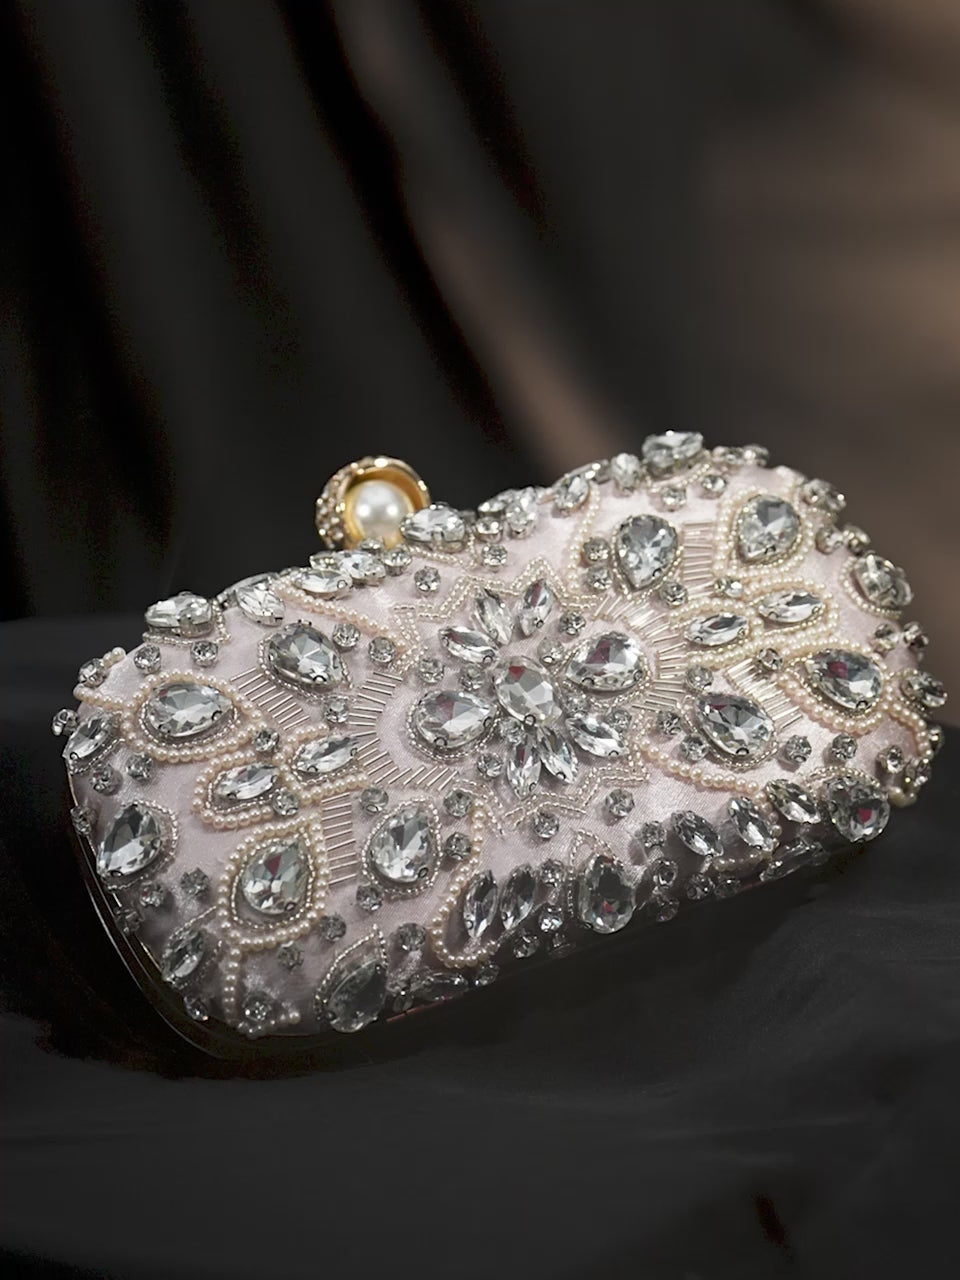 Rubans Cream bag studded with bold crystals exquisite clutch handbag